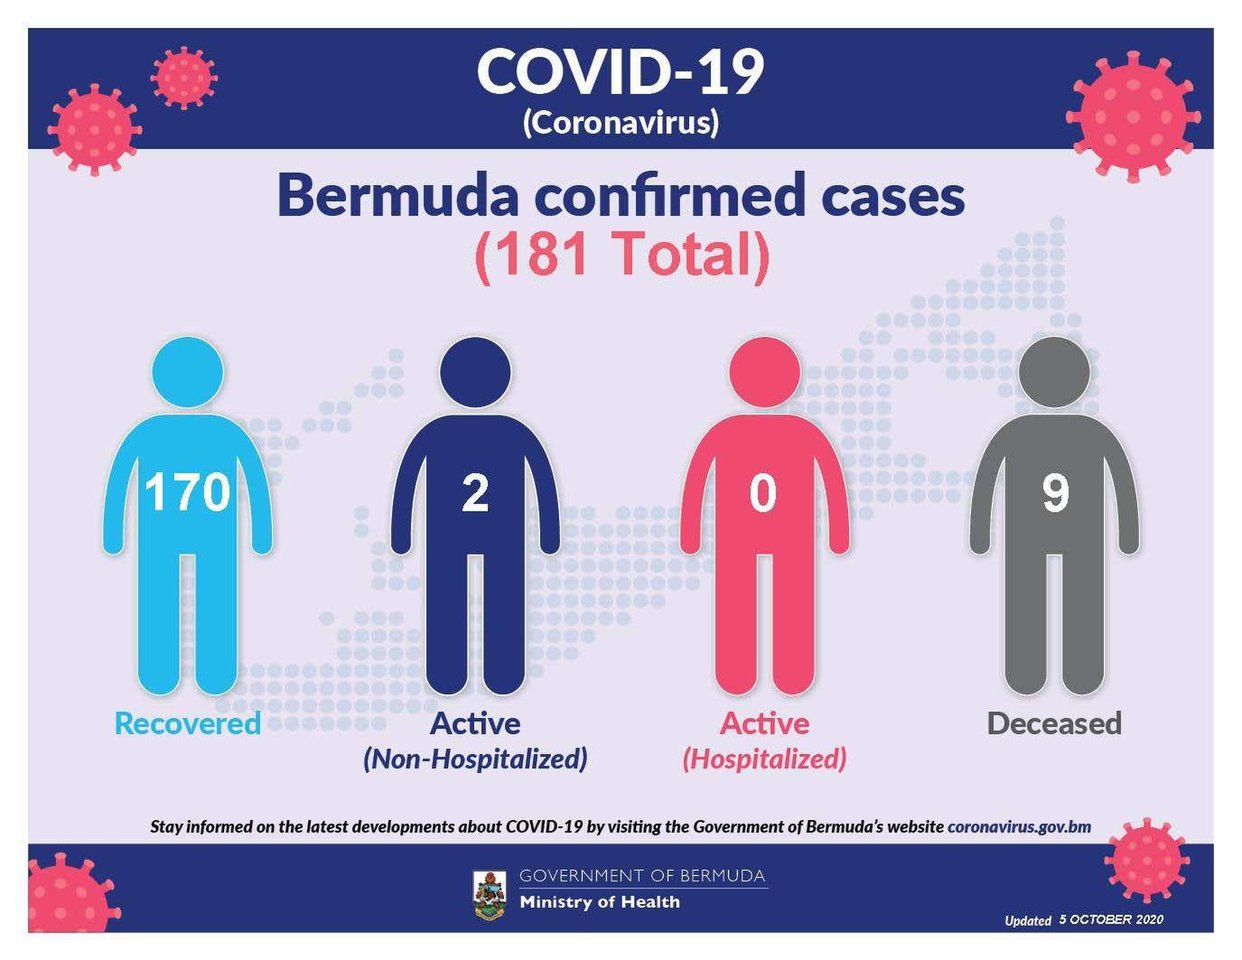 No new COVID-19 cases reported in Bermuda, 5 October